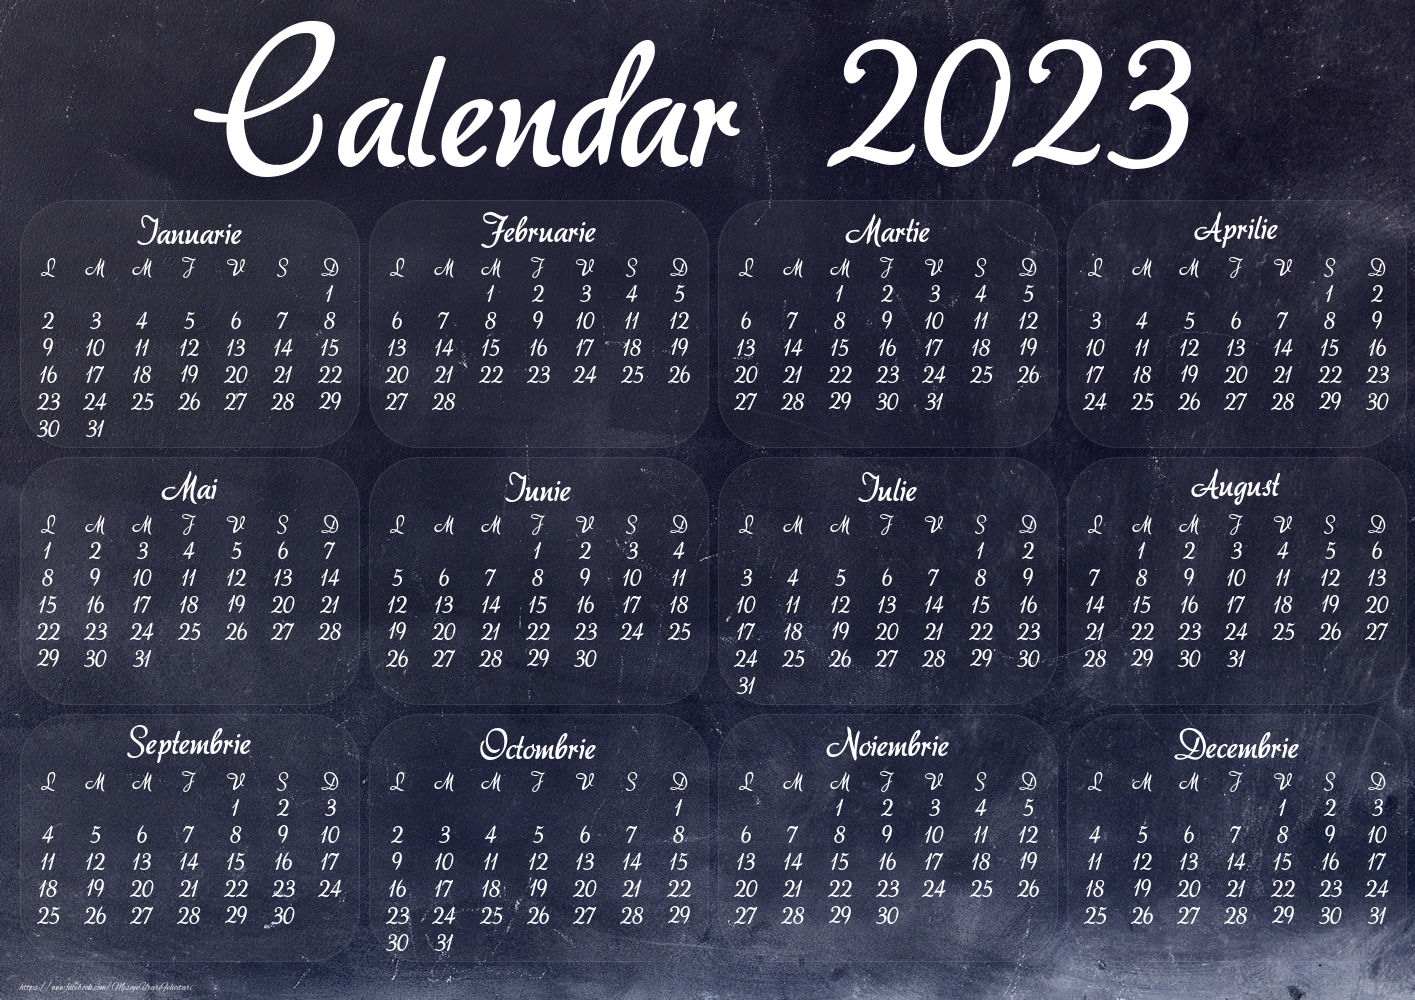 Imagini cu calendare - Calendar 2023 - Black - Model 0034 - mesajeurarifelicitari.com